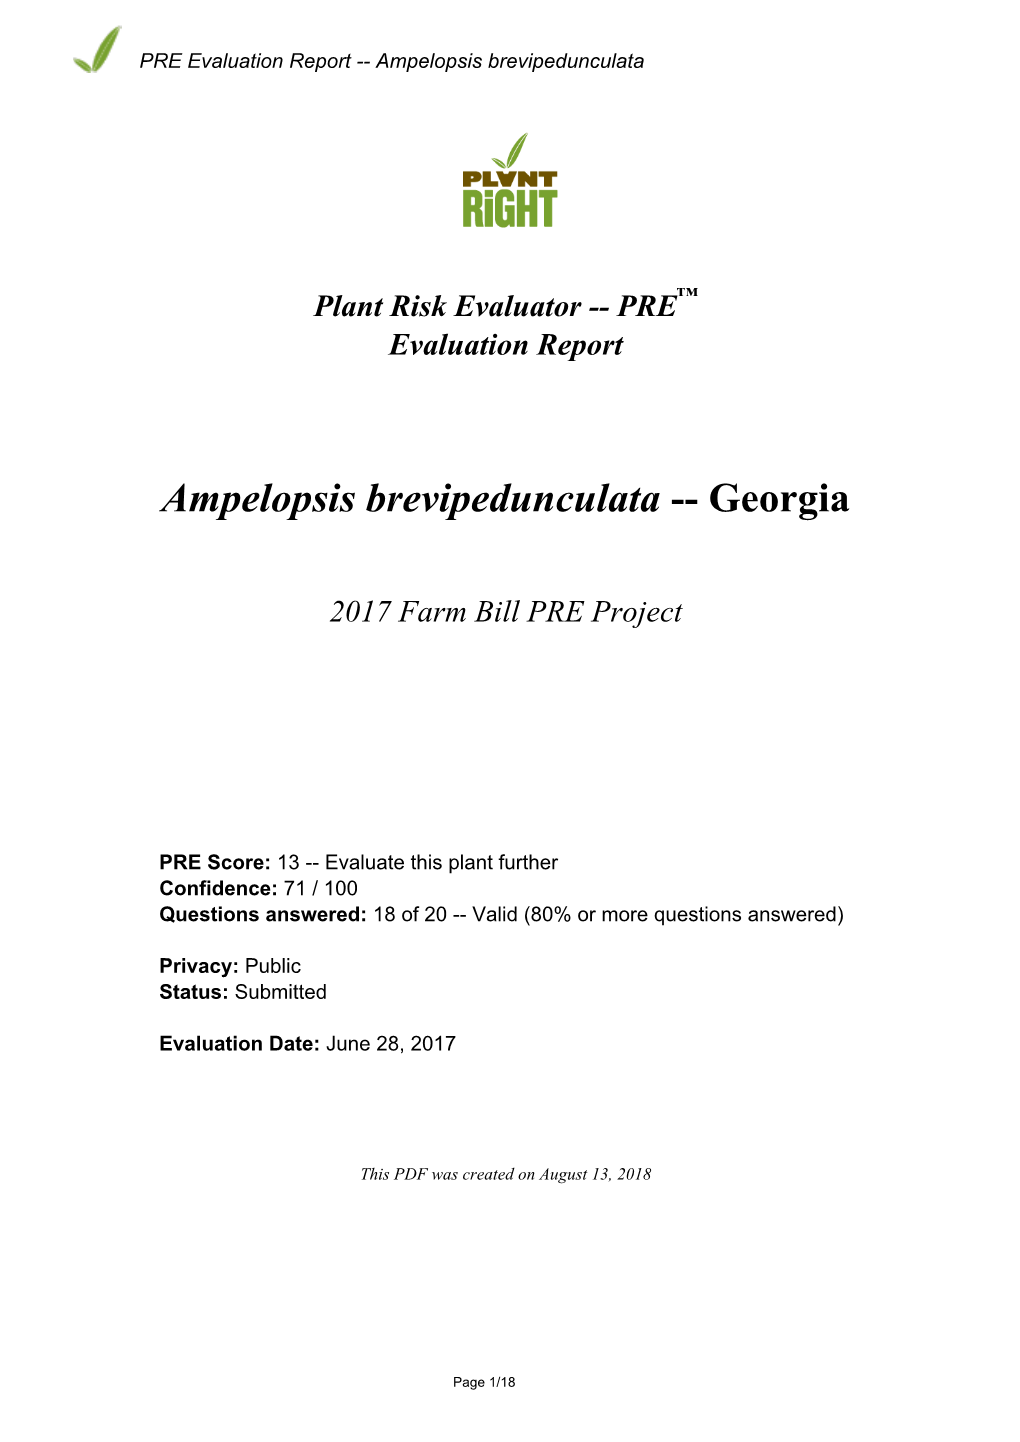 PRE Evaluation Report for Ampelopsis Brevipedunculata